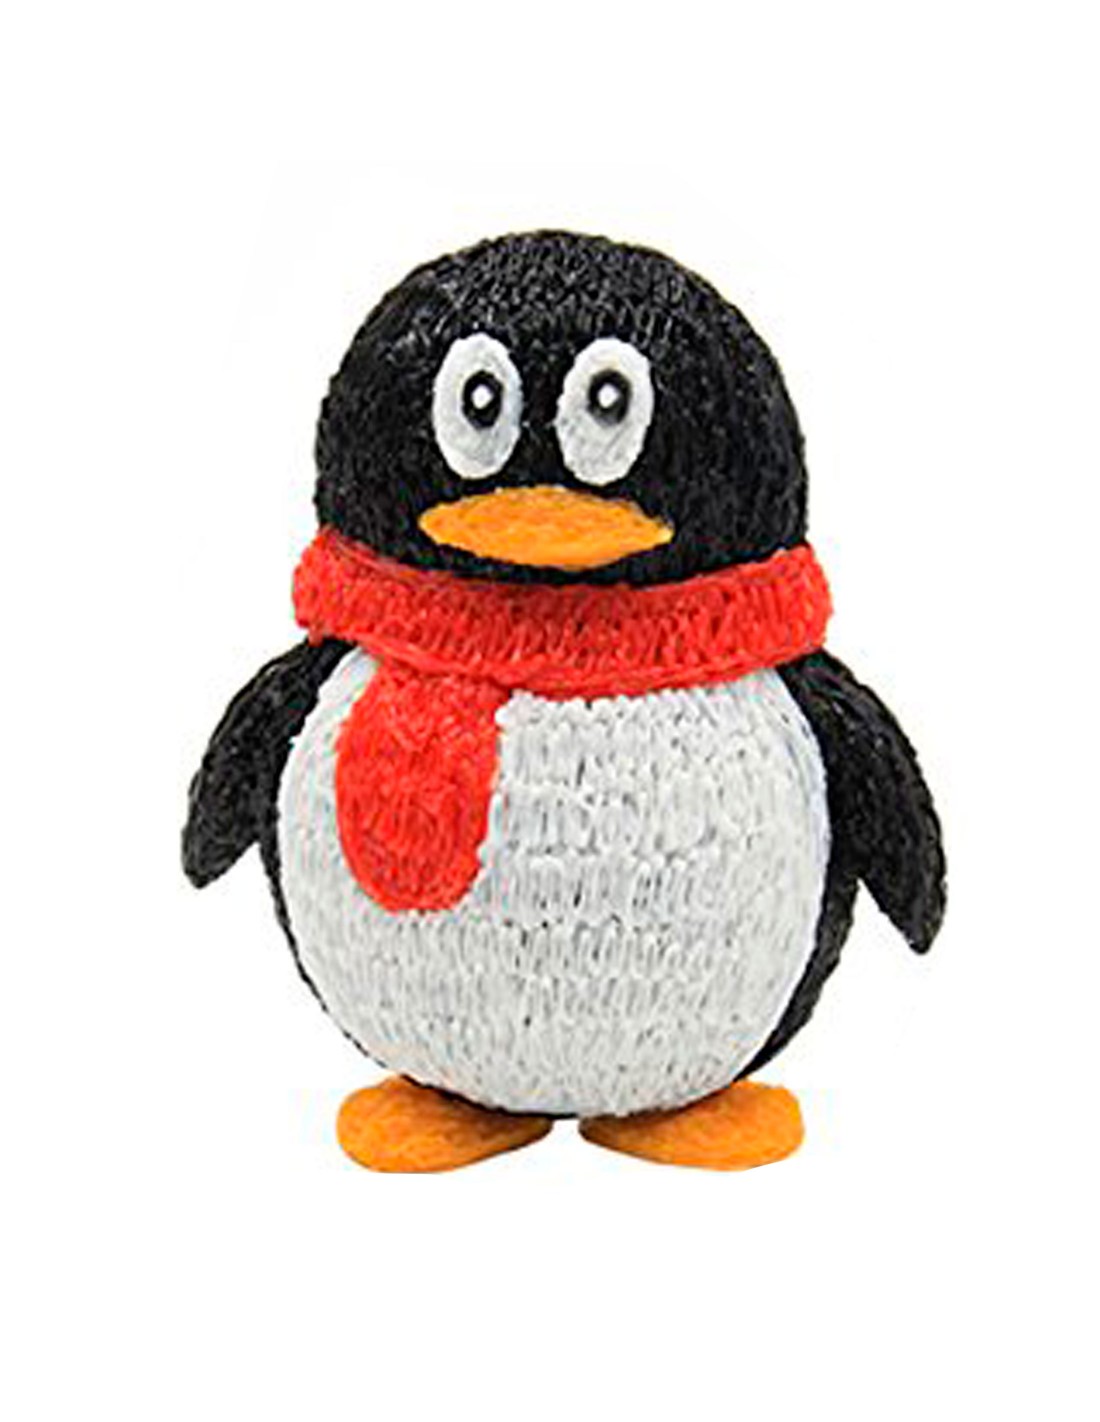 Penguin Free Template For A 3d Pen